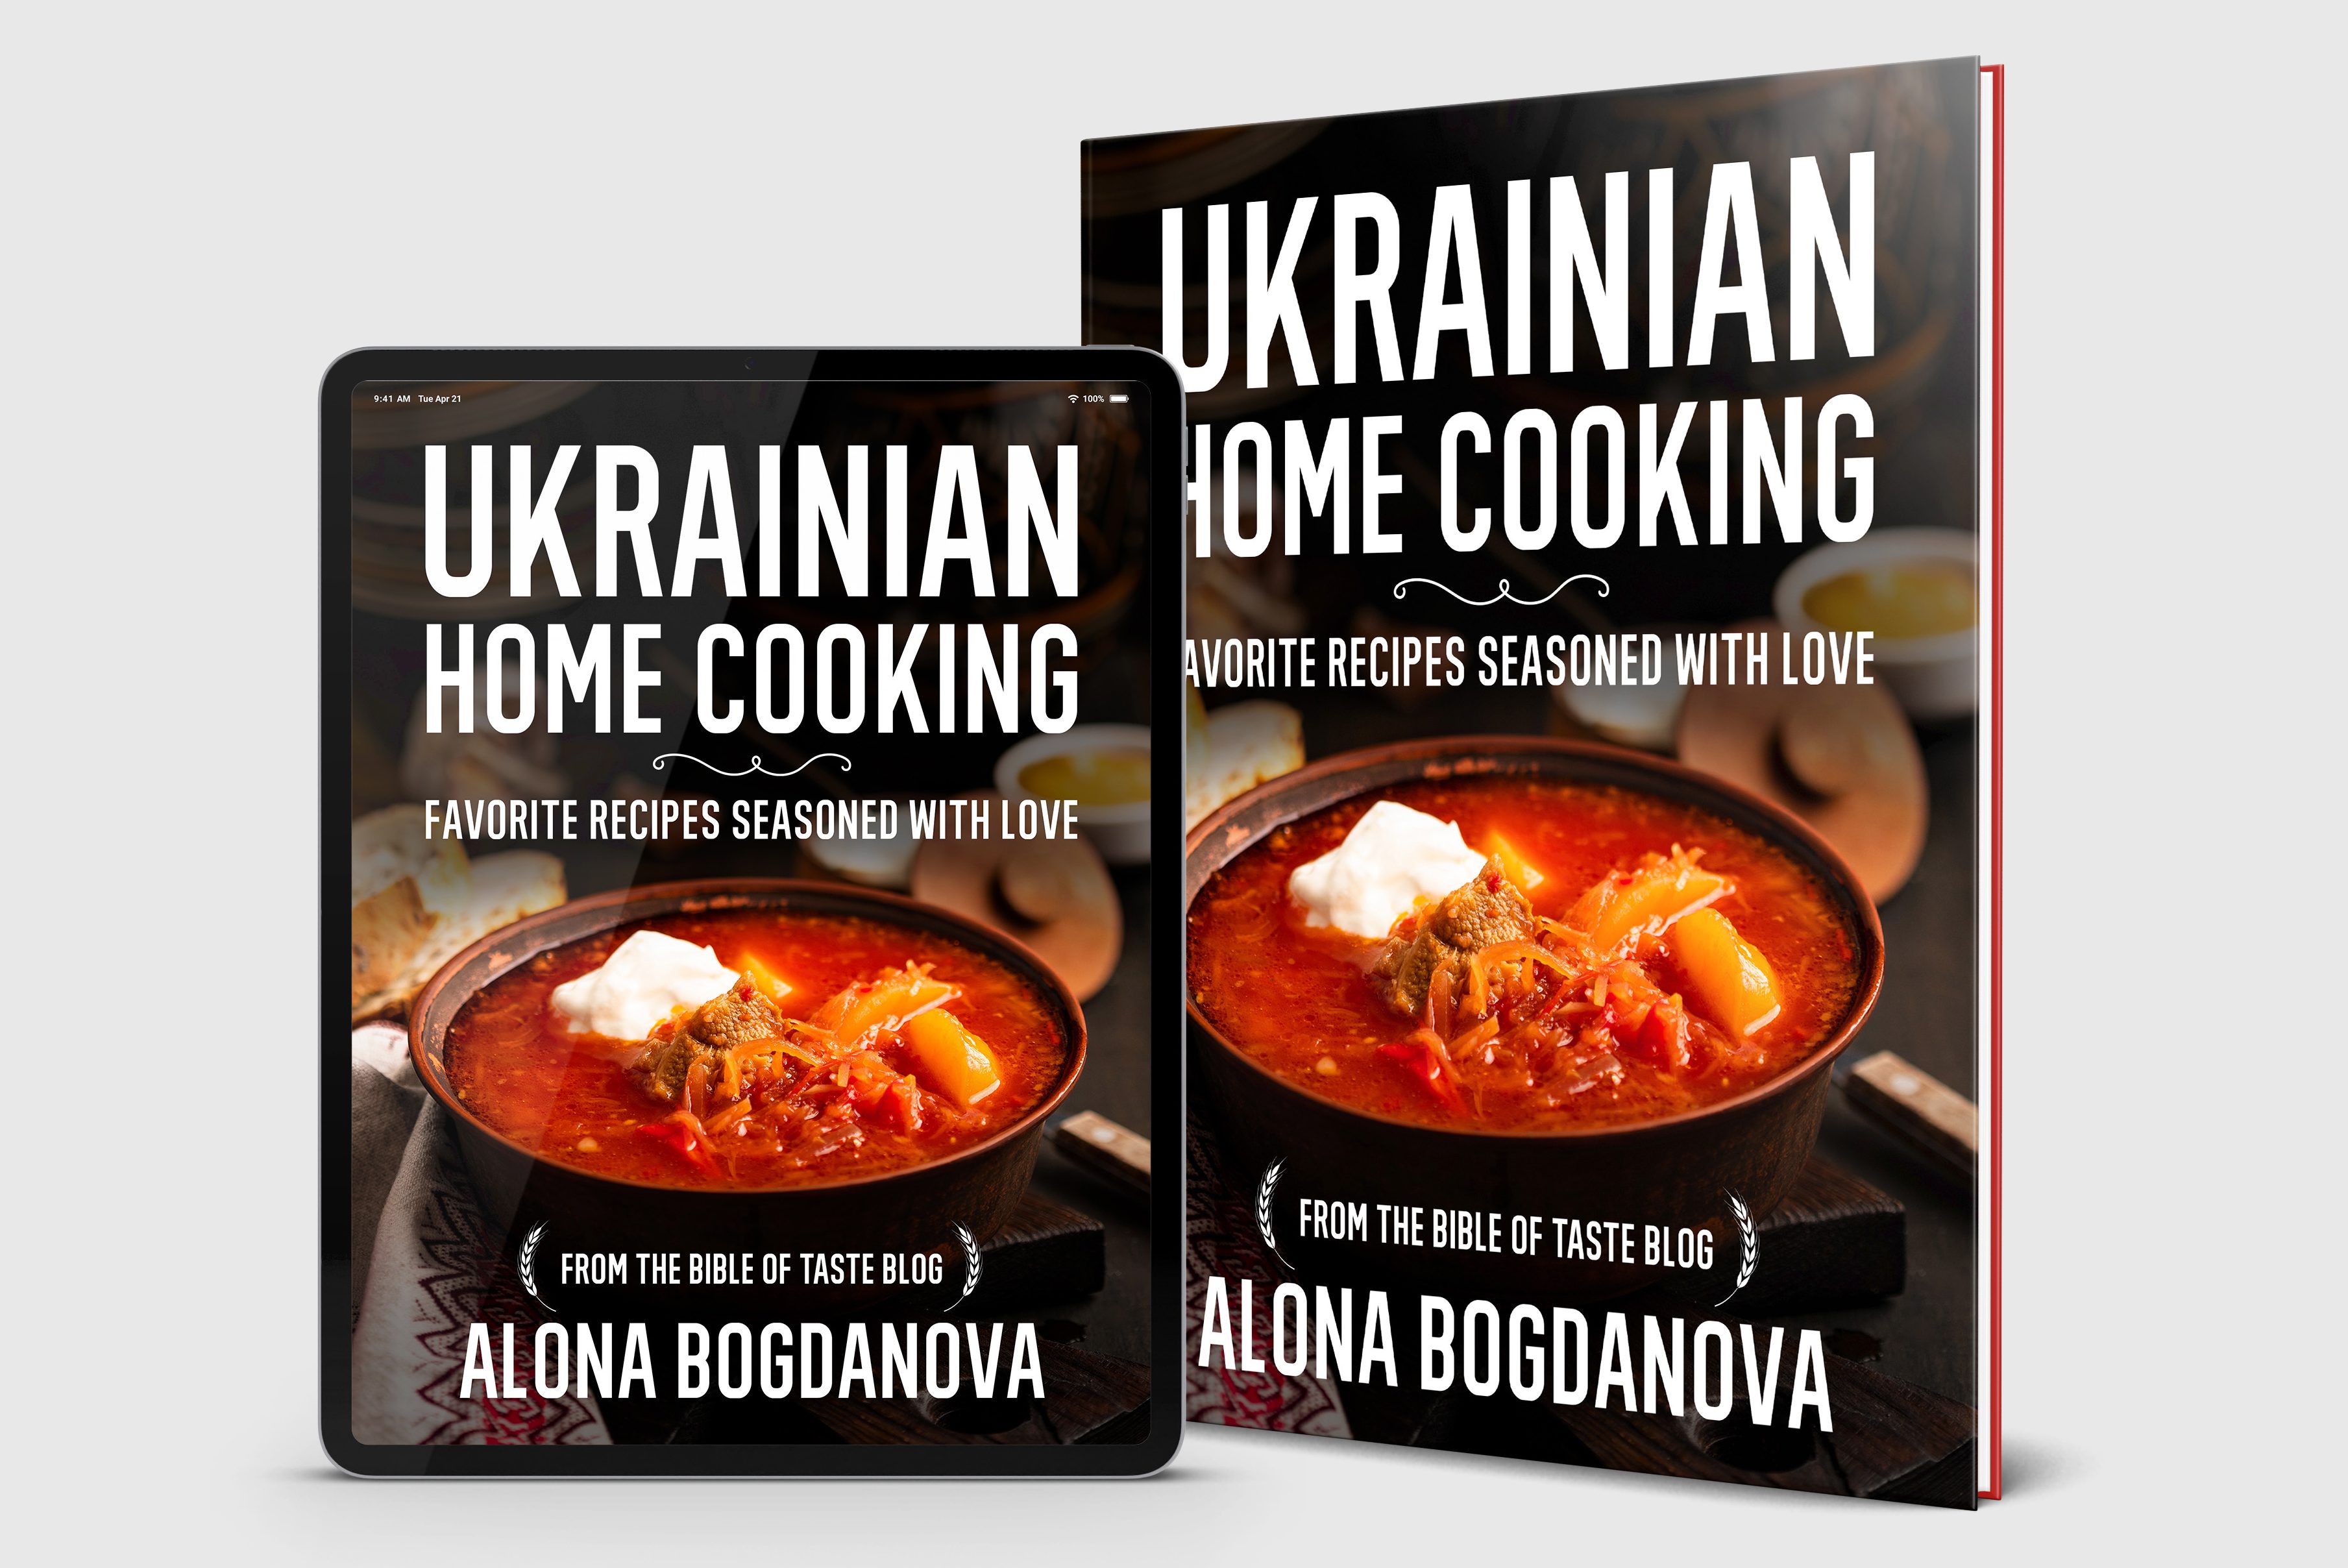 UKRAINIAN HOME COOKING, Ukrainian recipes, download, Ukrainian cookbook